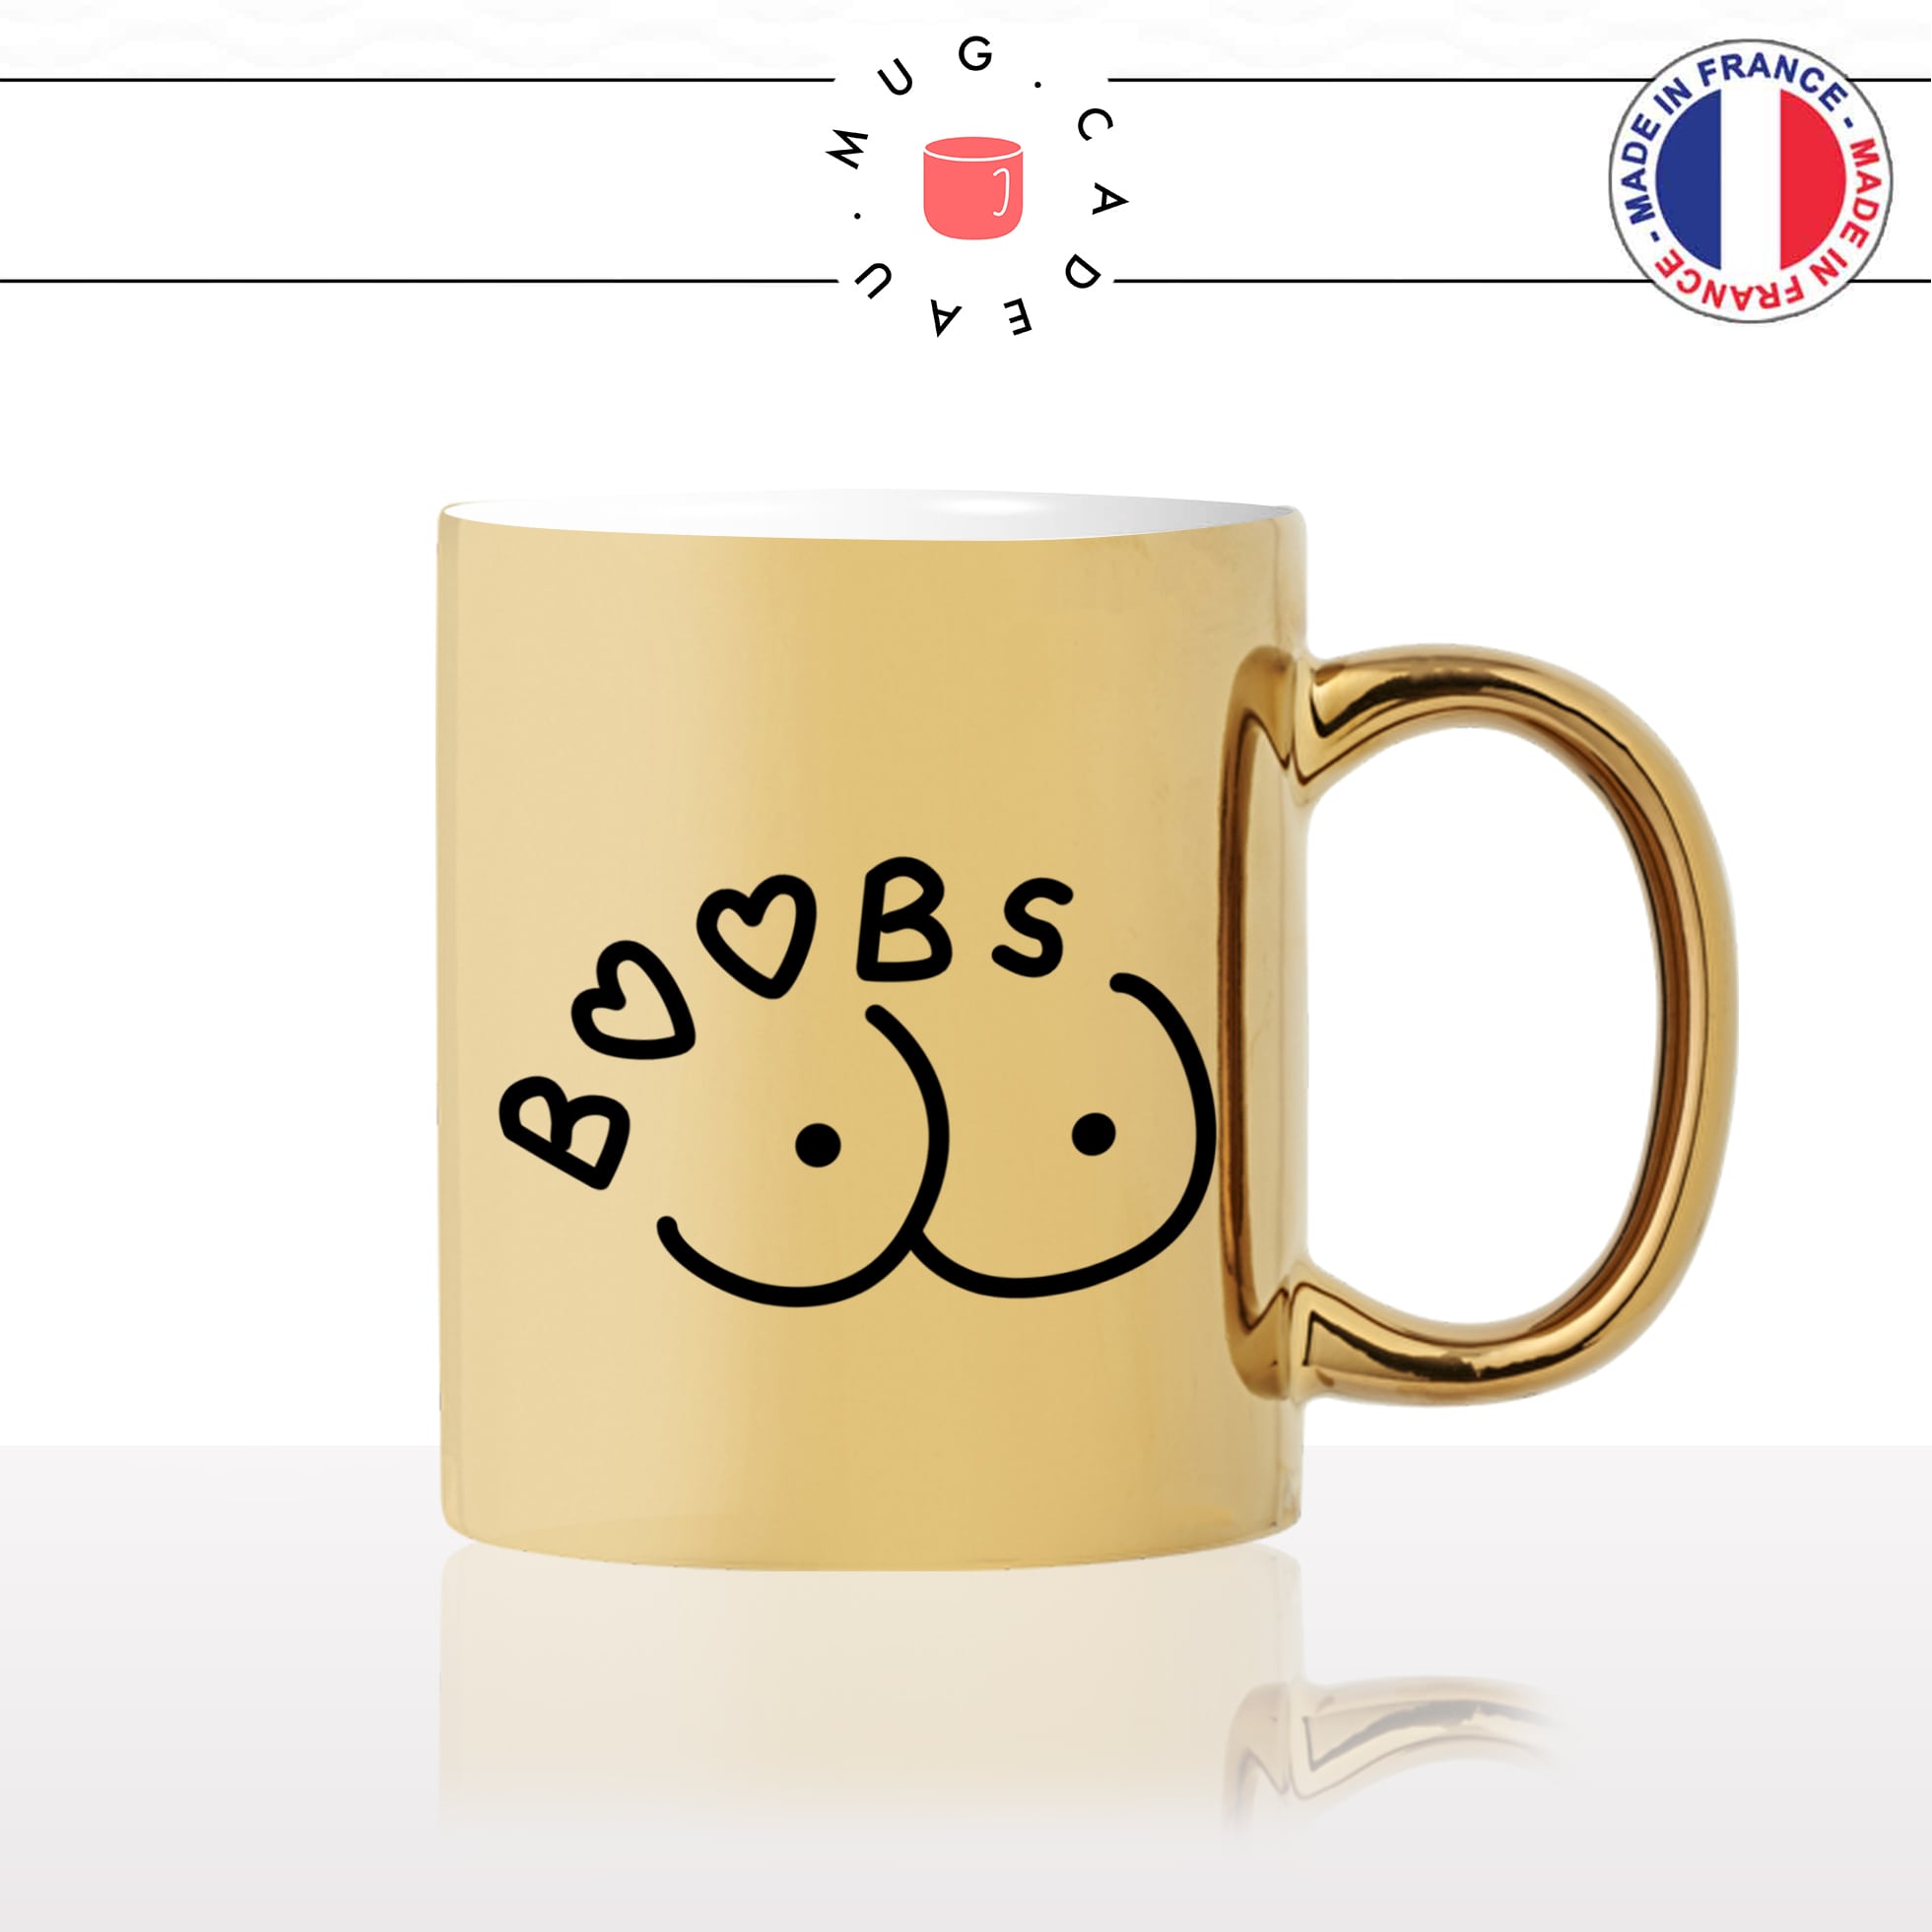 mug-tasse-doré-or-gold-boobs-seins-feministe-amour-self-love-femme-couple-humour-fun-idée-cadeau-personnalisé-café-thé2-min